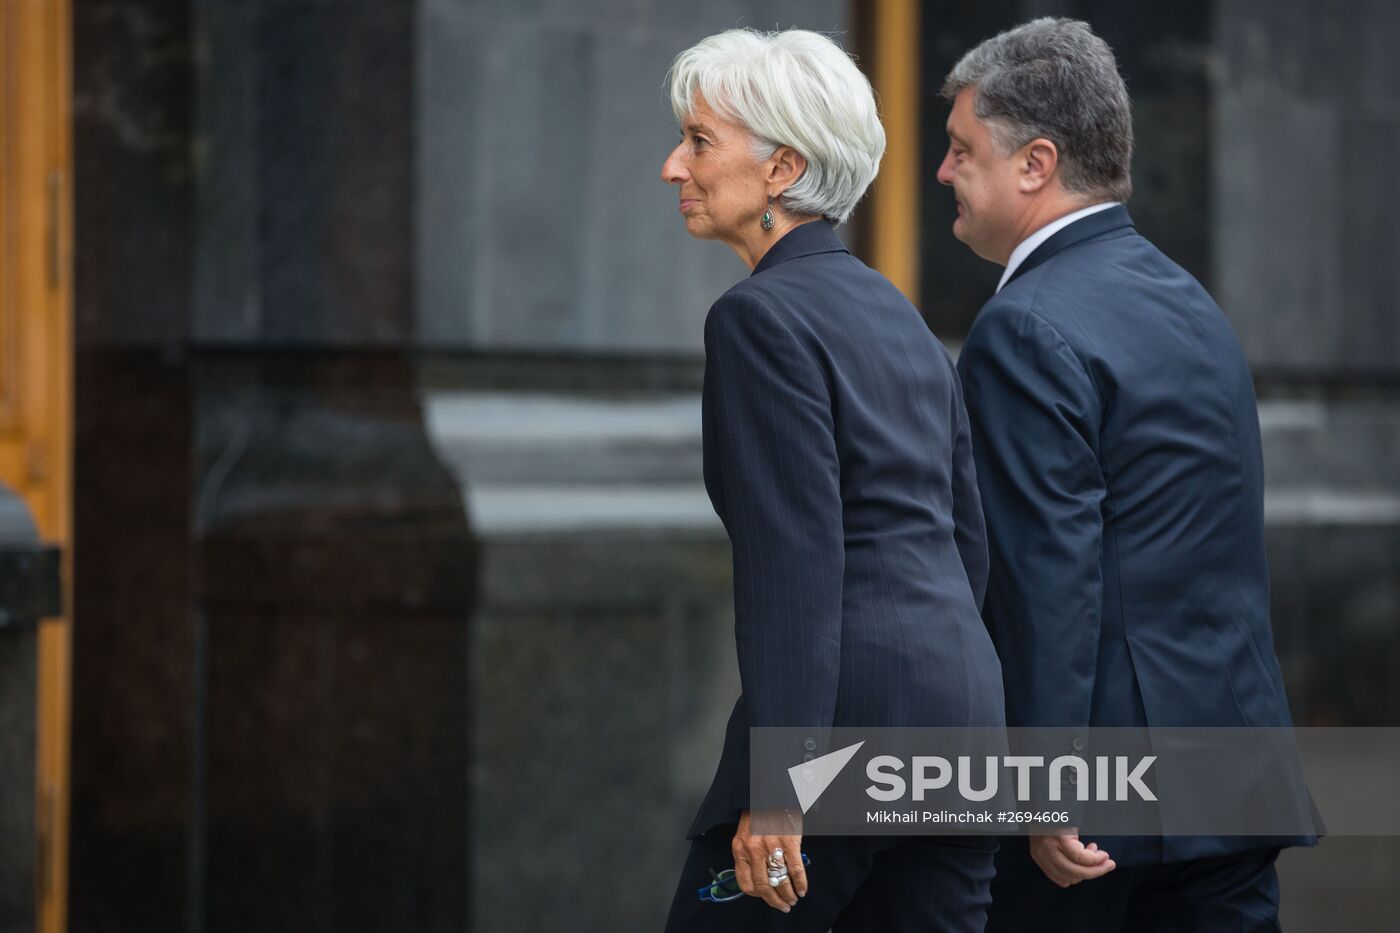 Ukrainian President Petro Poroshenko meets with IMF Managing Director Christine Lagarde